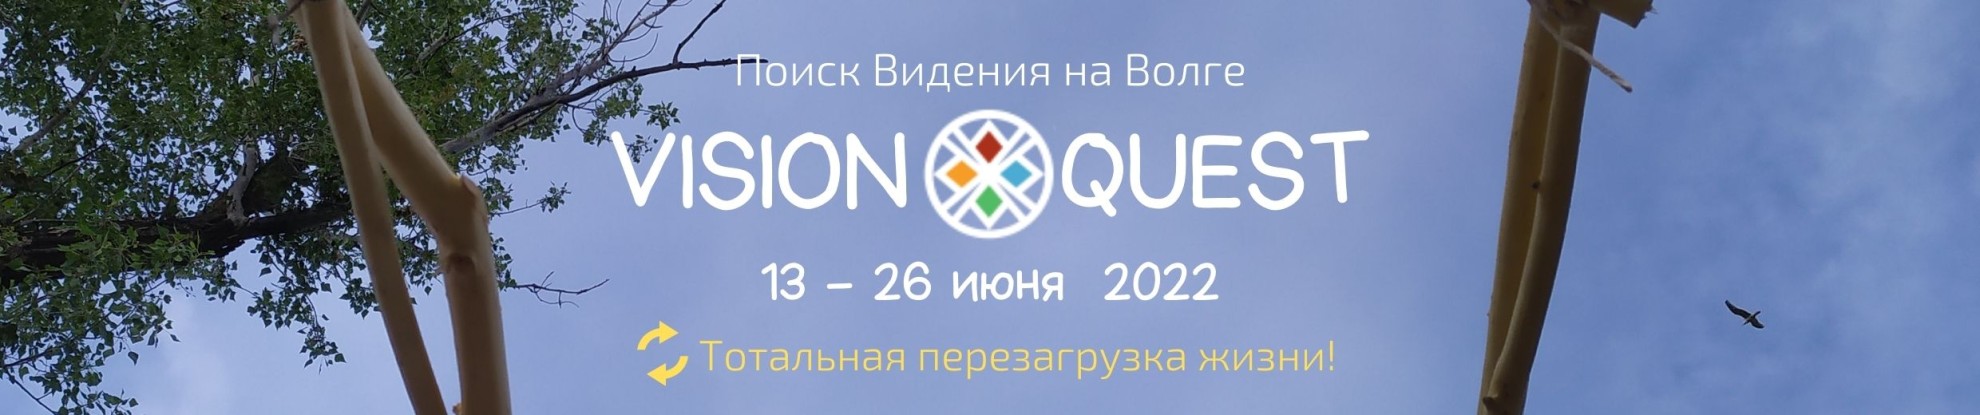 vision-quest-2022-shirokij-banner